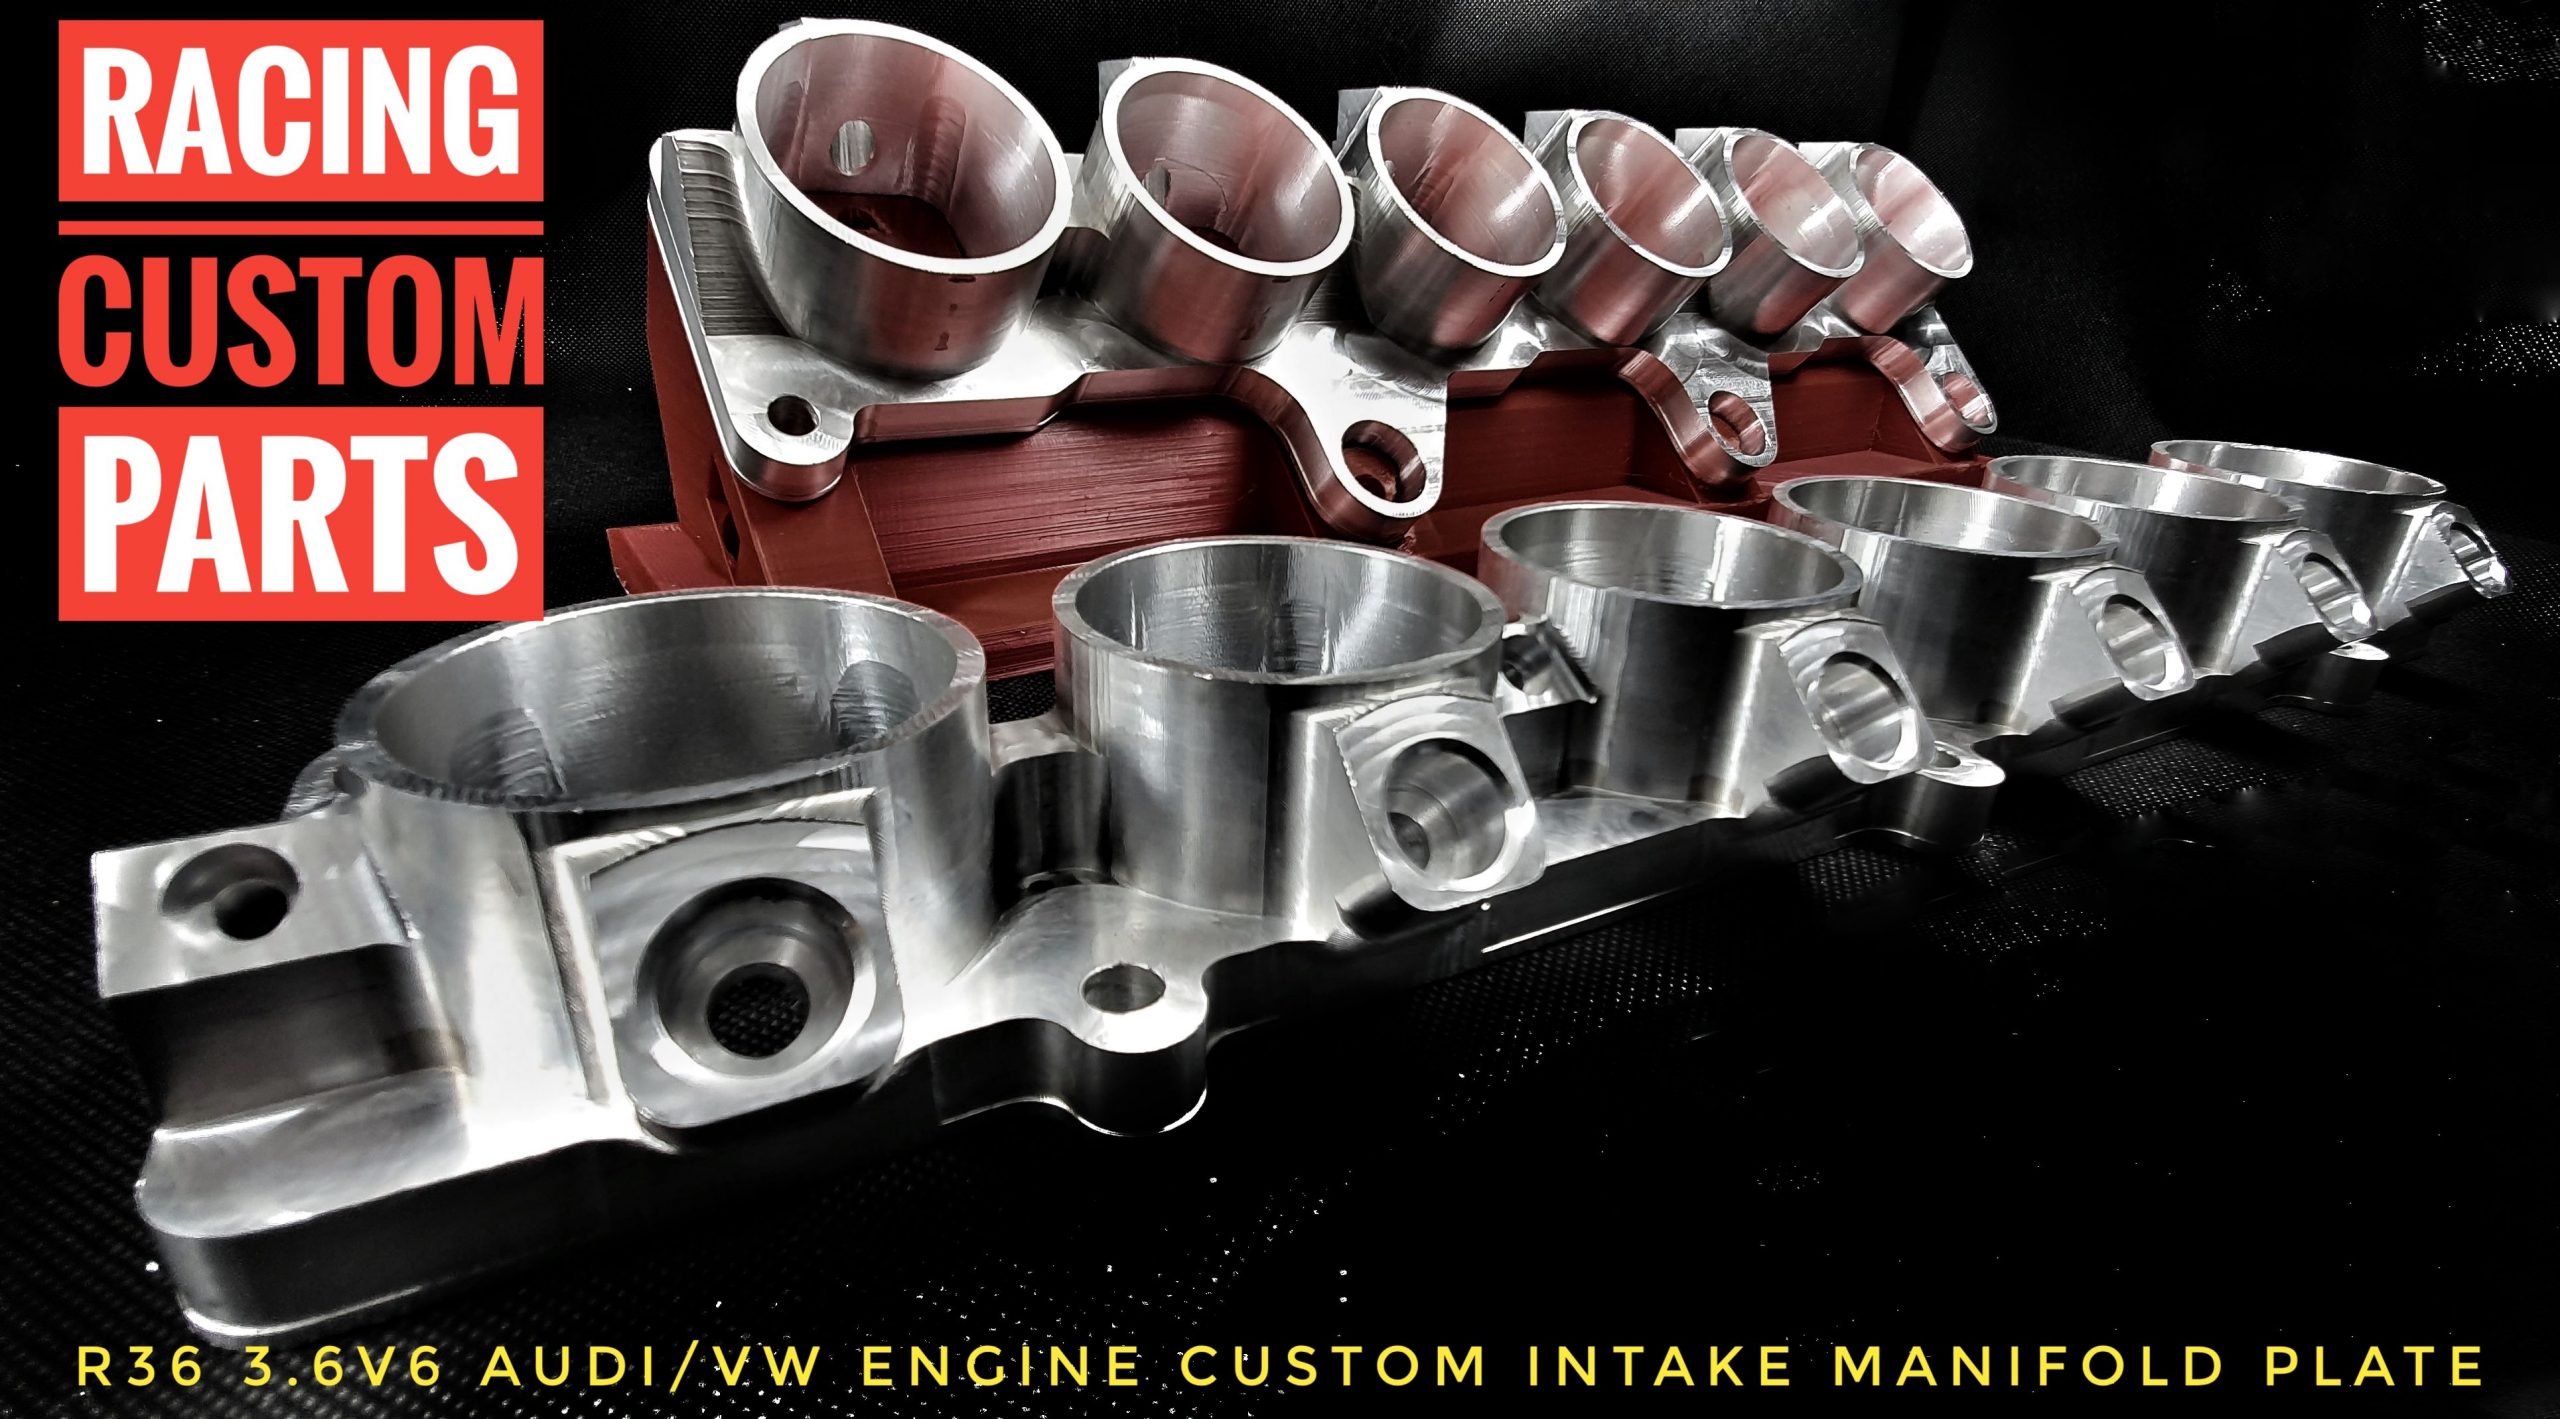 R36 3,6 v6 Audi VW engine billet cnc intake manifold plate with extra fuel injectors billet cnc racing custom parts passat r36